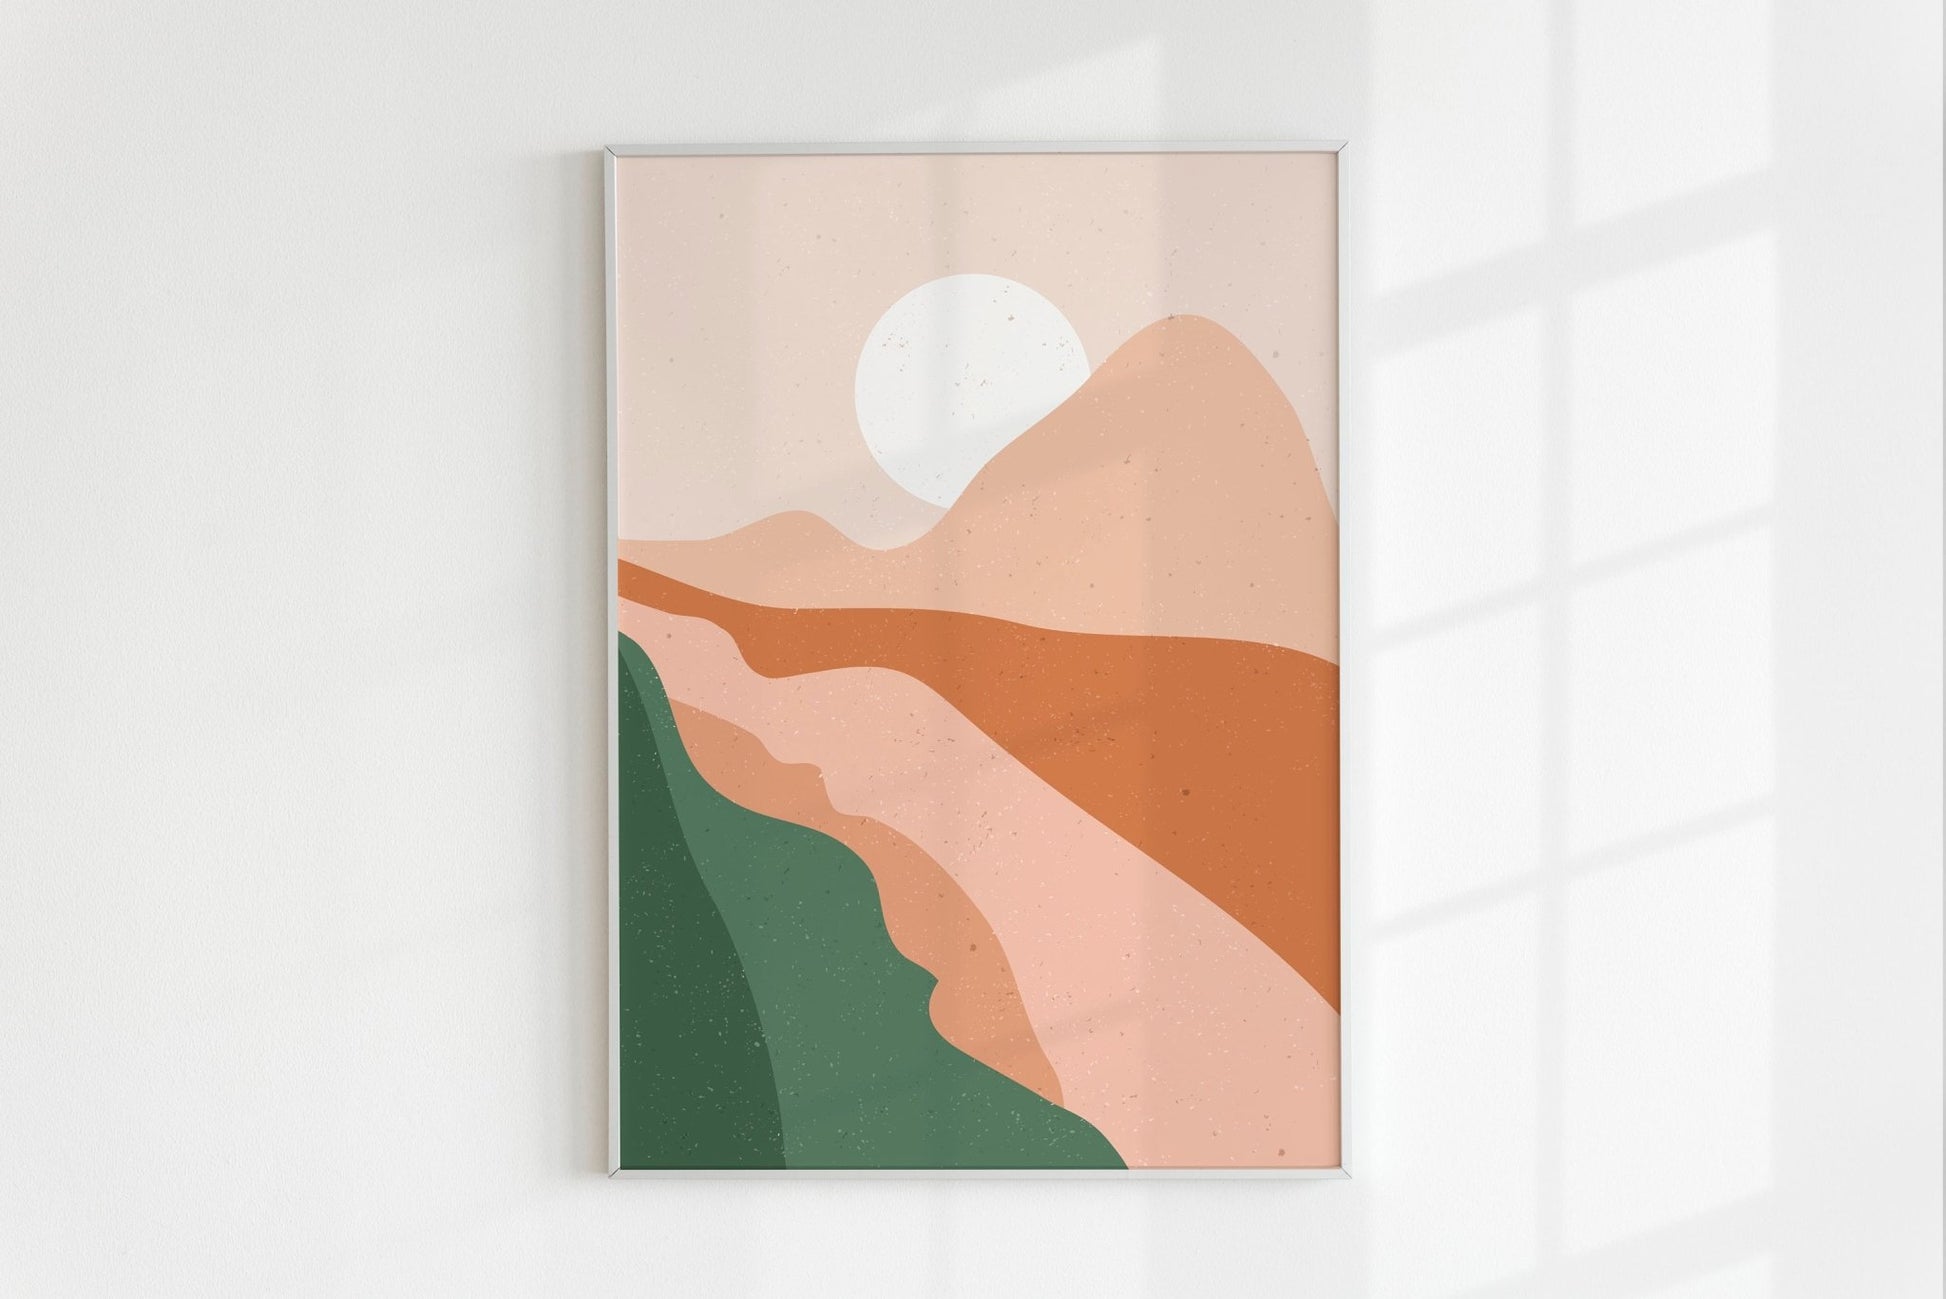 Set of 3 Abstract Landscape Prints - Pathos Studio - Art Print Sets